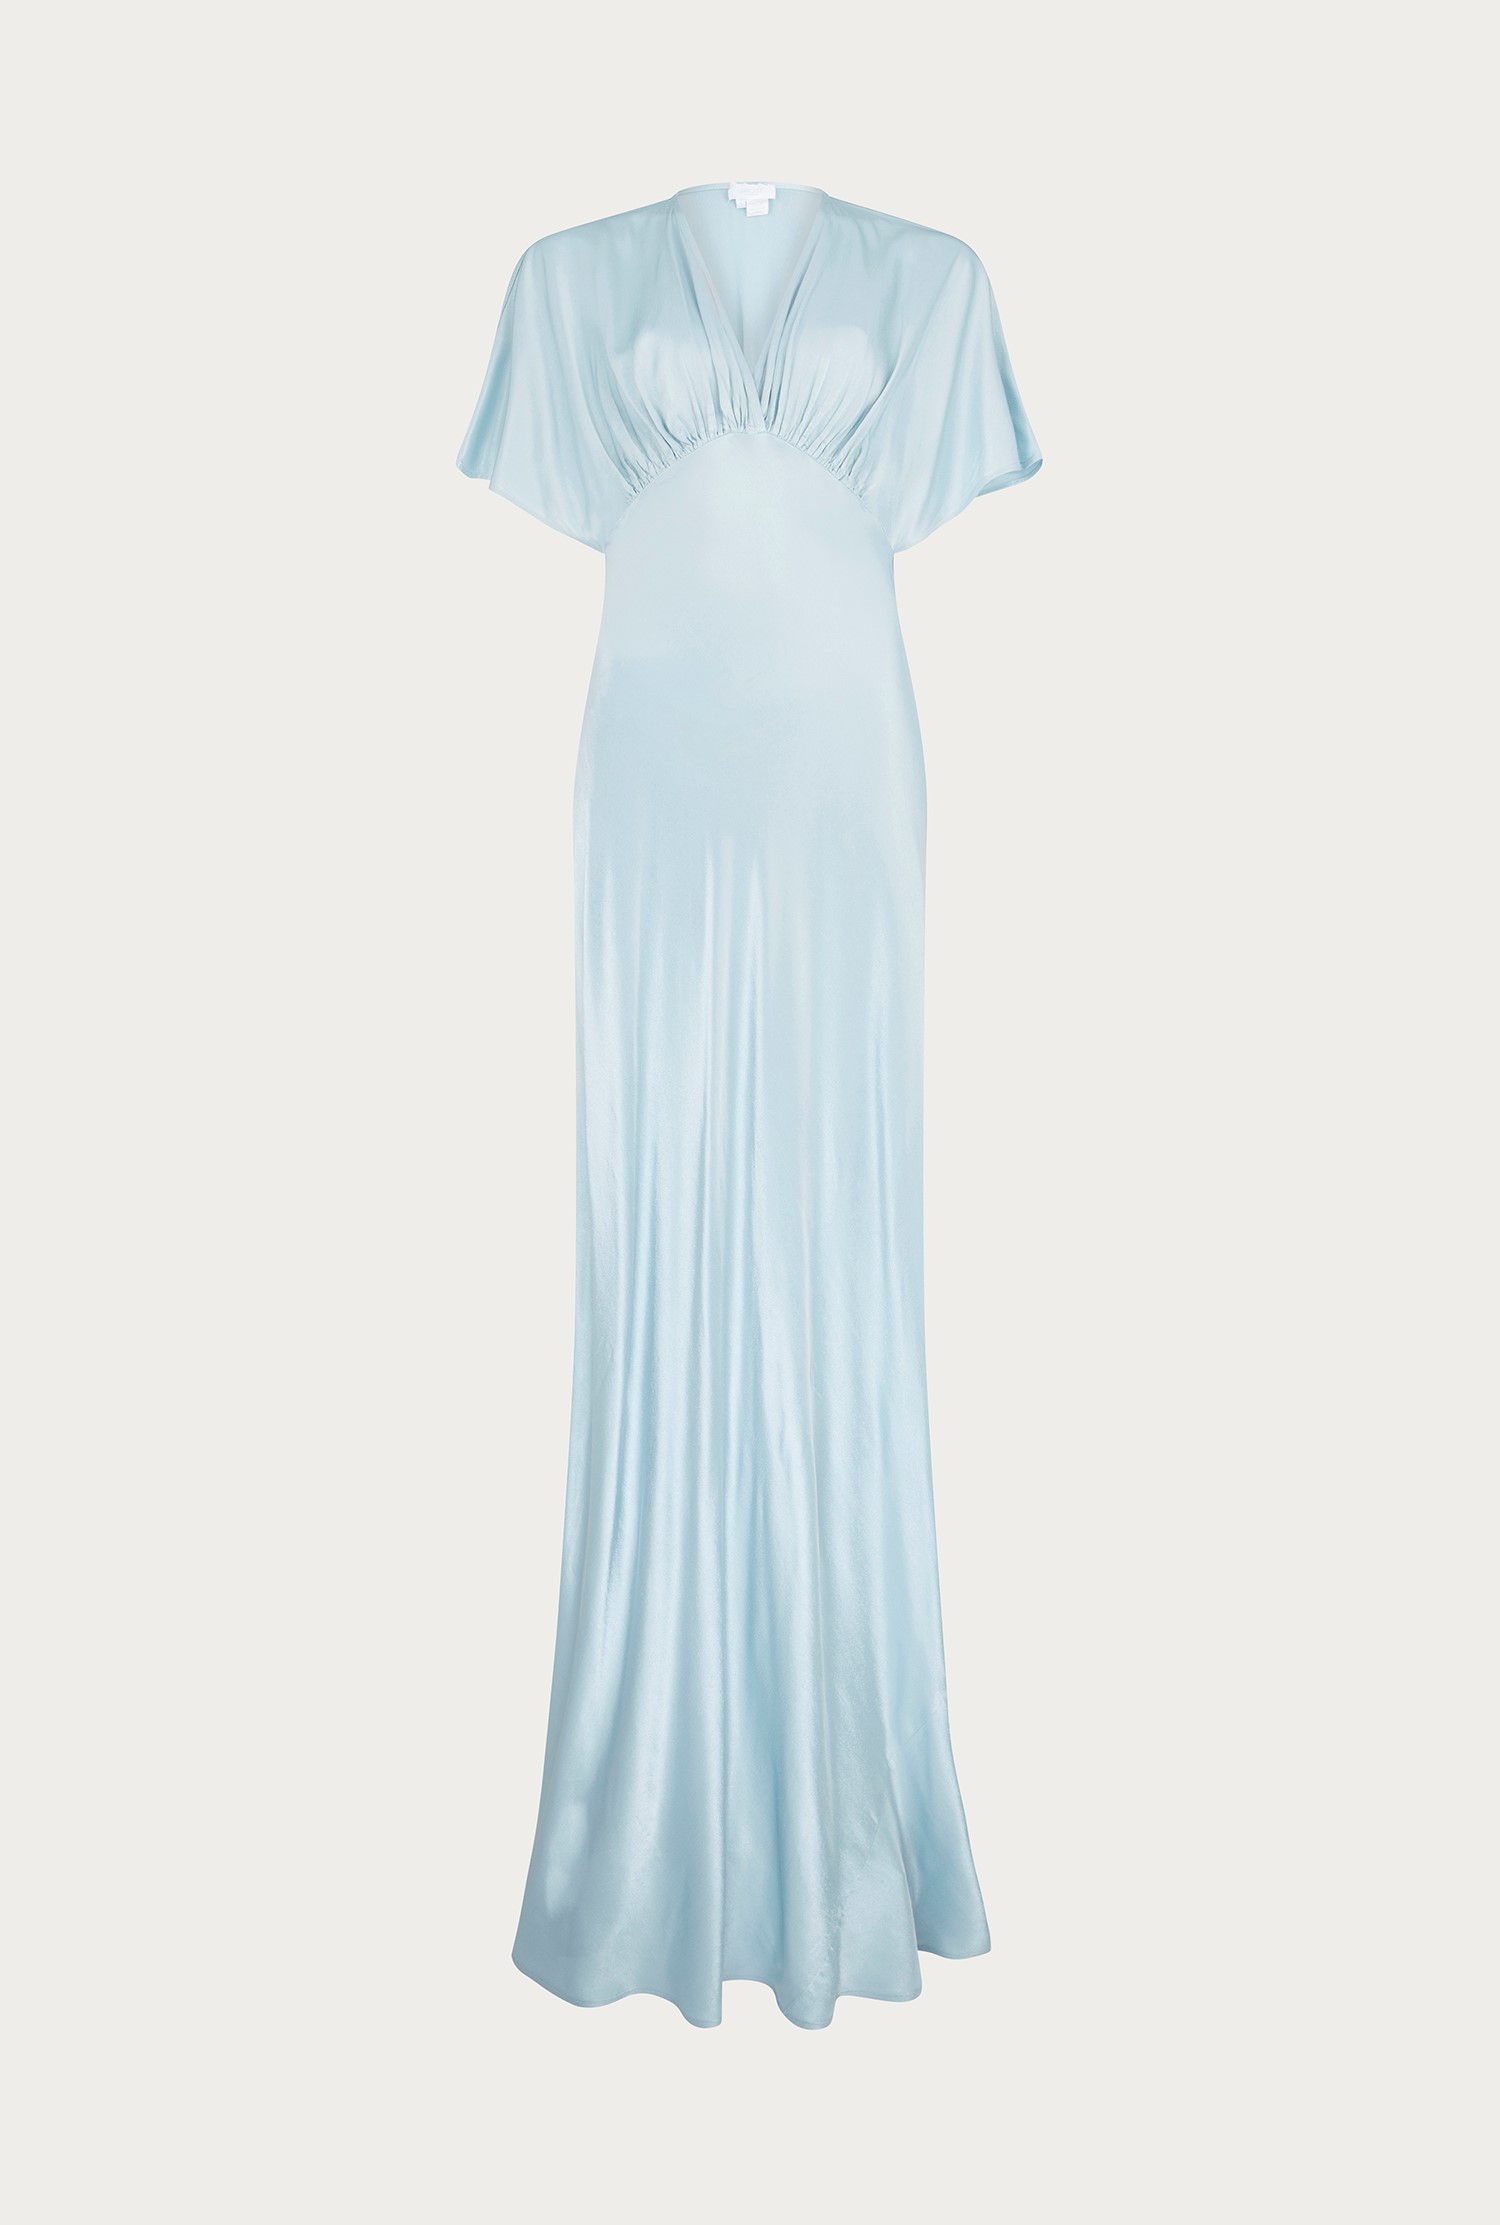 Collette Light Blue Satin Maxi Dress